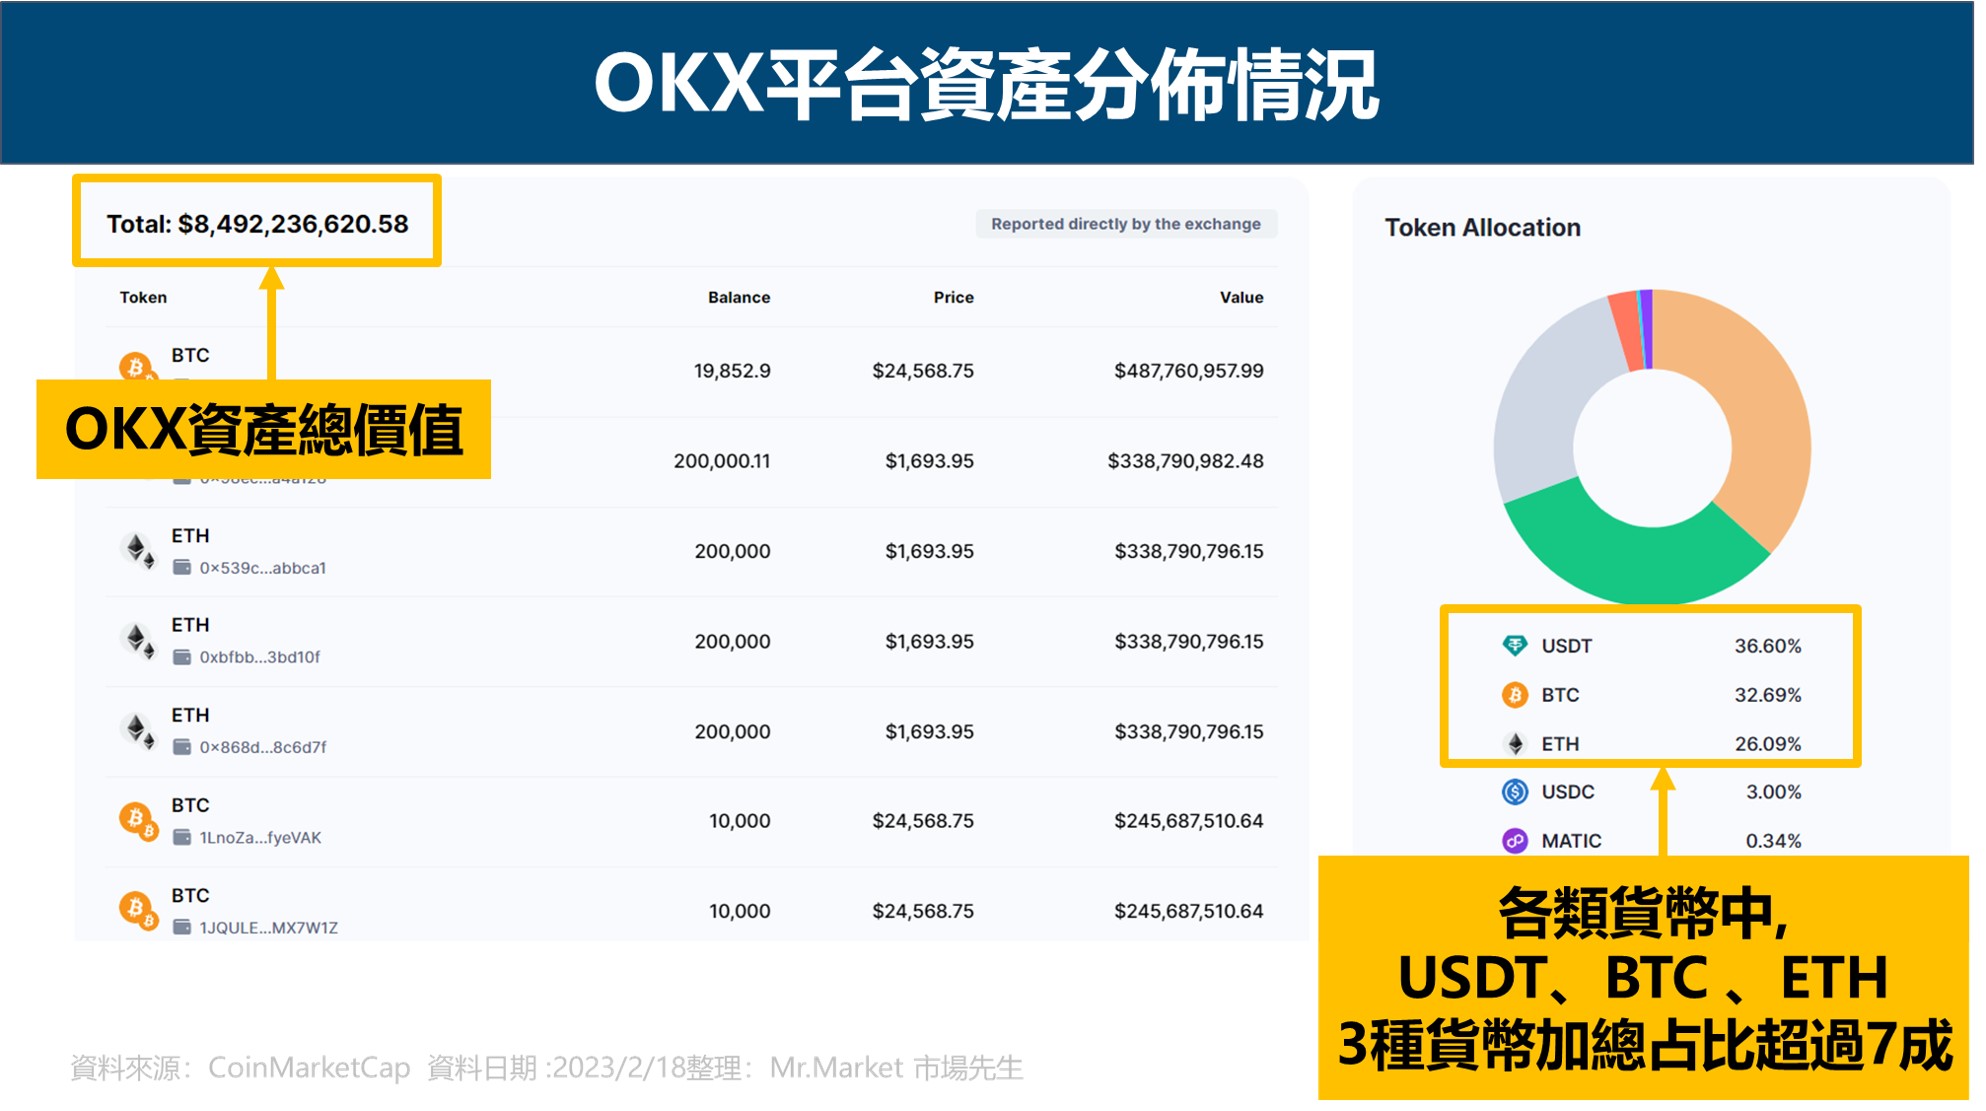 OKX平台資產分佈